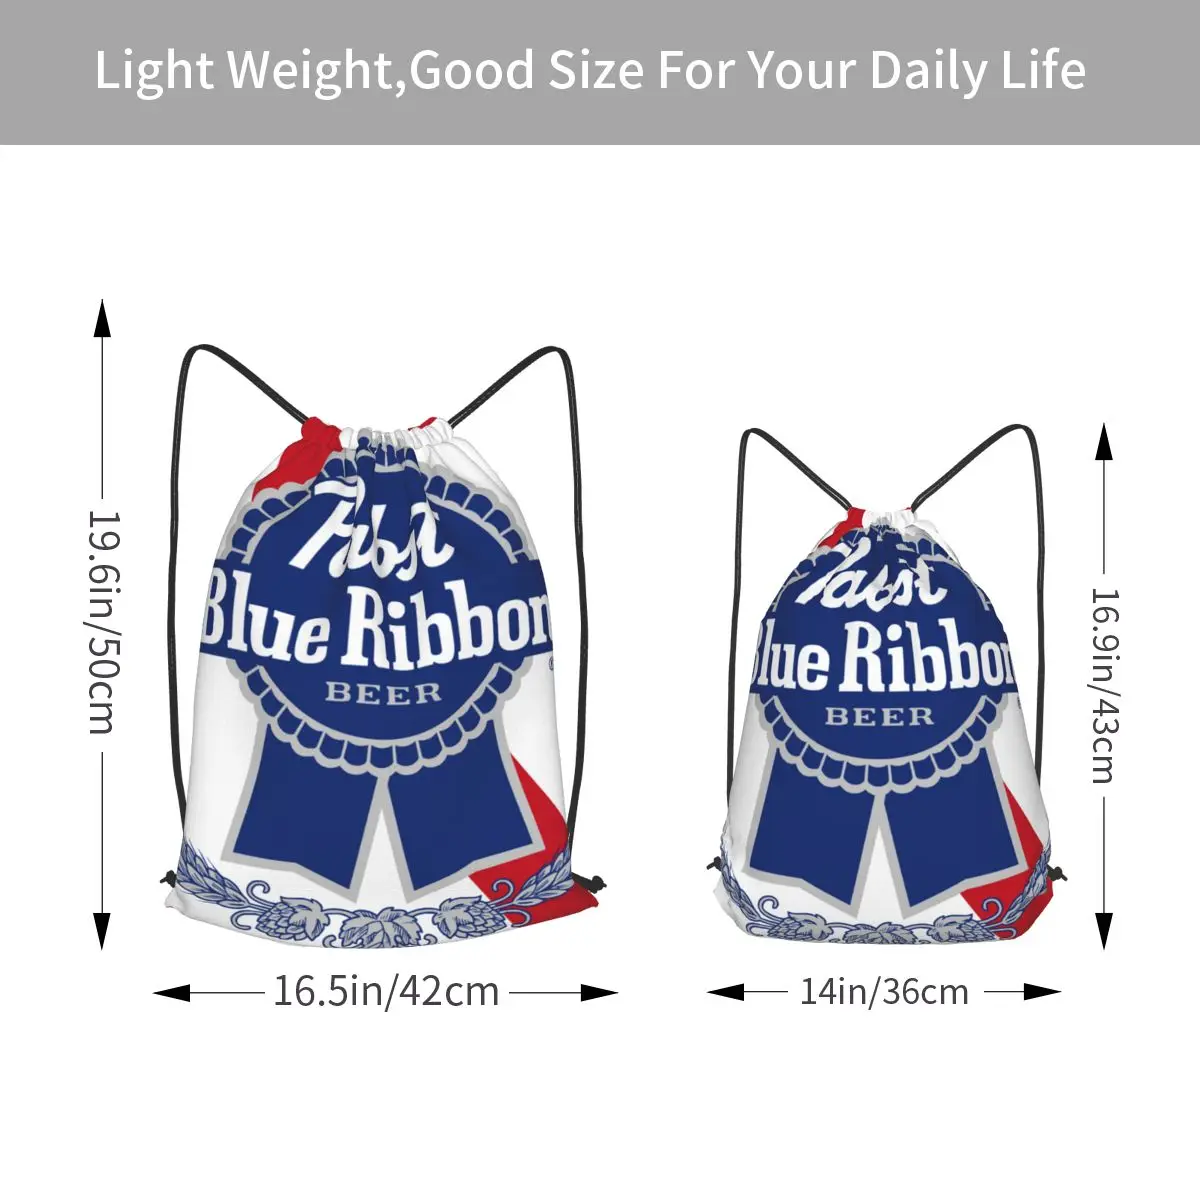 Рюкзак на шнурке с логотипом пива Pabst Blue Ribbon, мужская спортивная сумка для занятий в тренажерном зале, рюкзак для занятий йогой, рюкзак для женщин